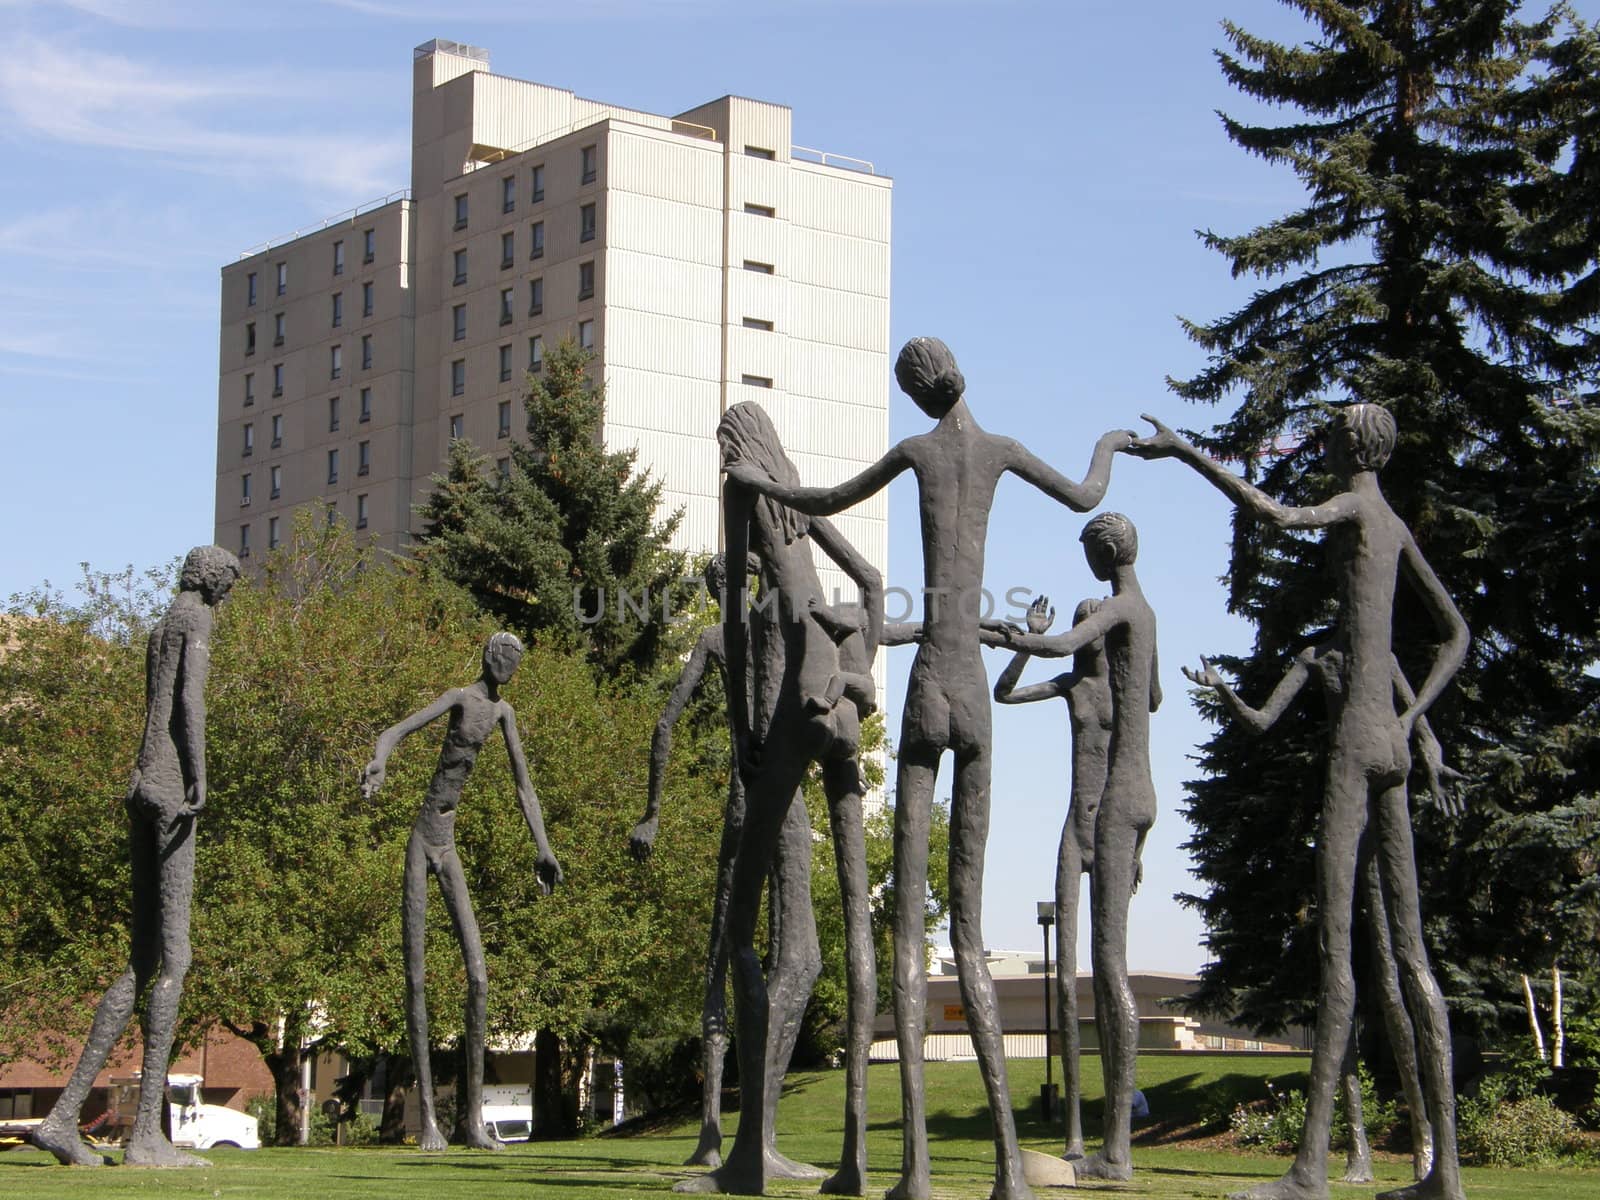 Sculpture in Calgary in Alberta, Canada